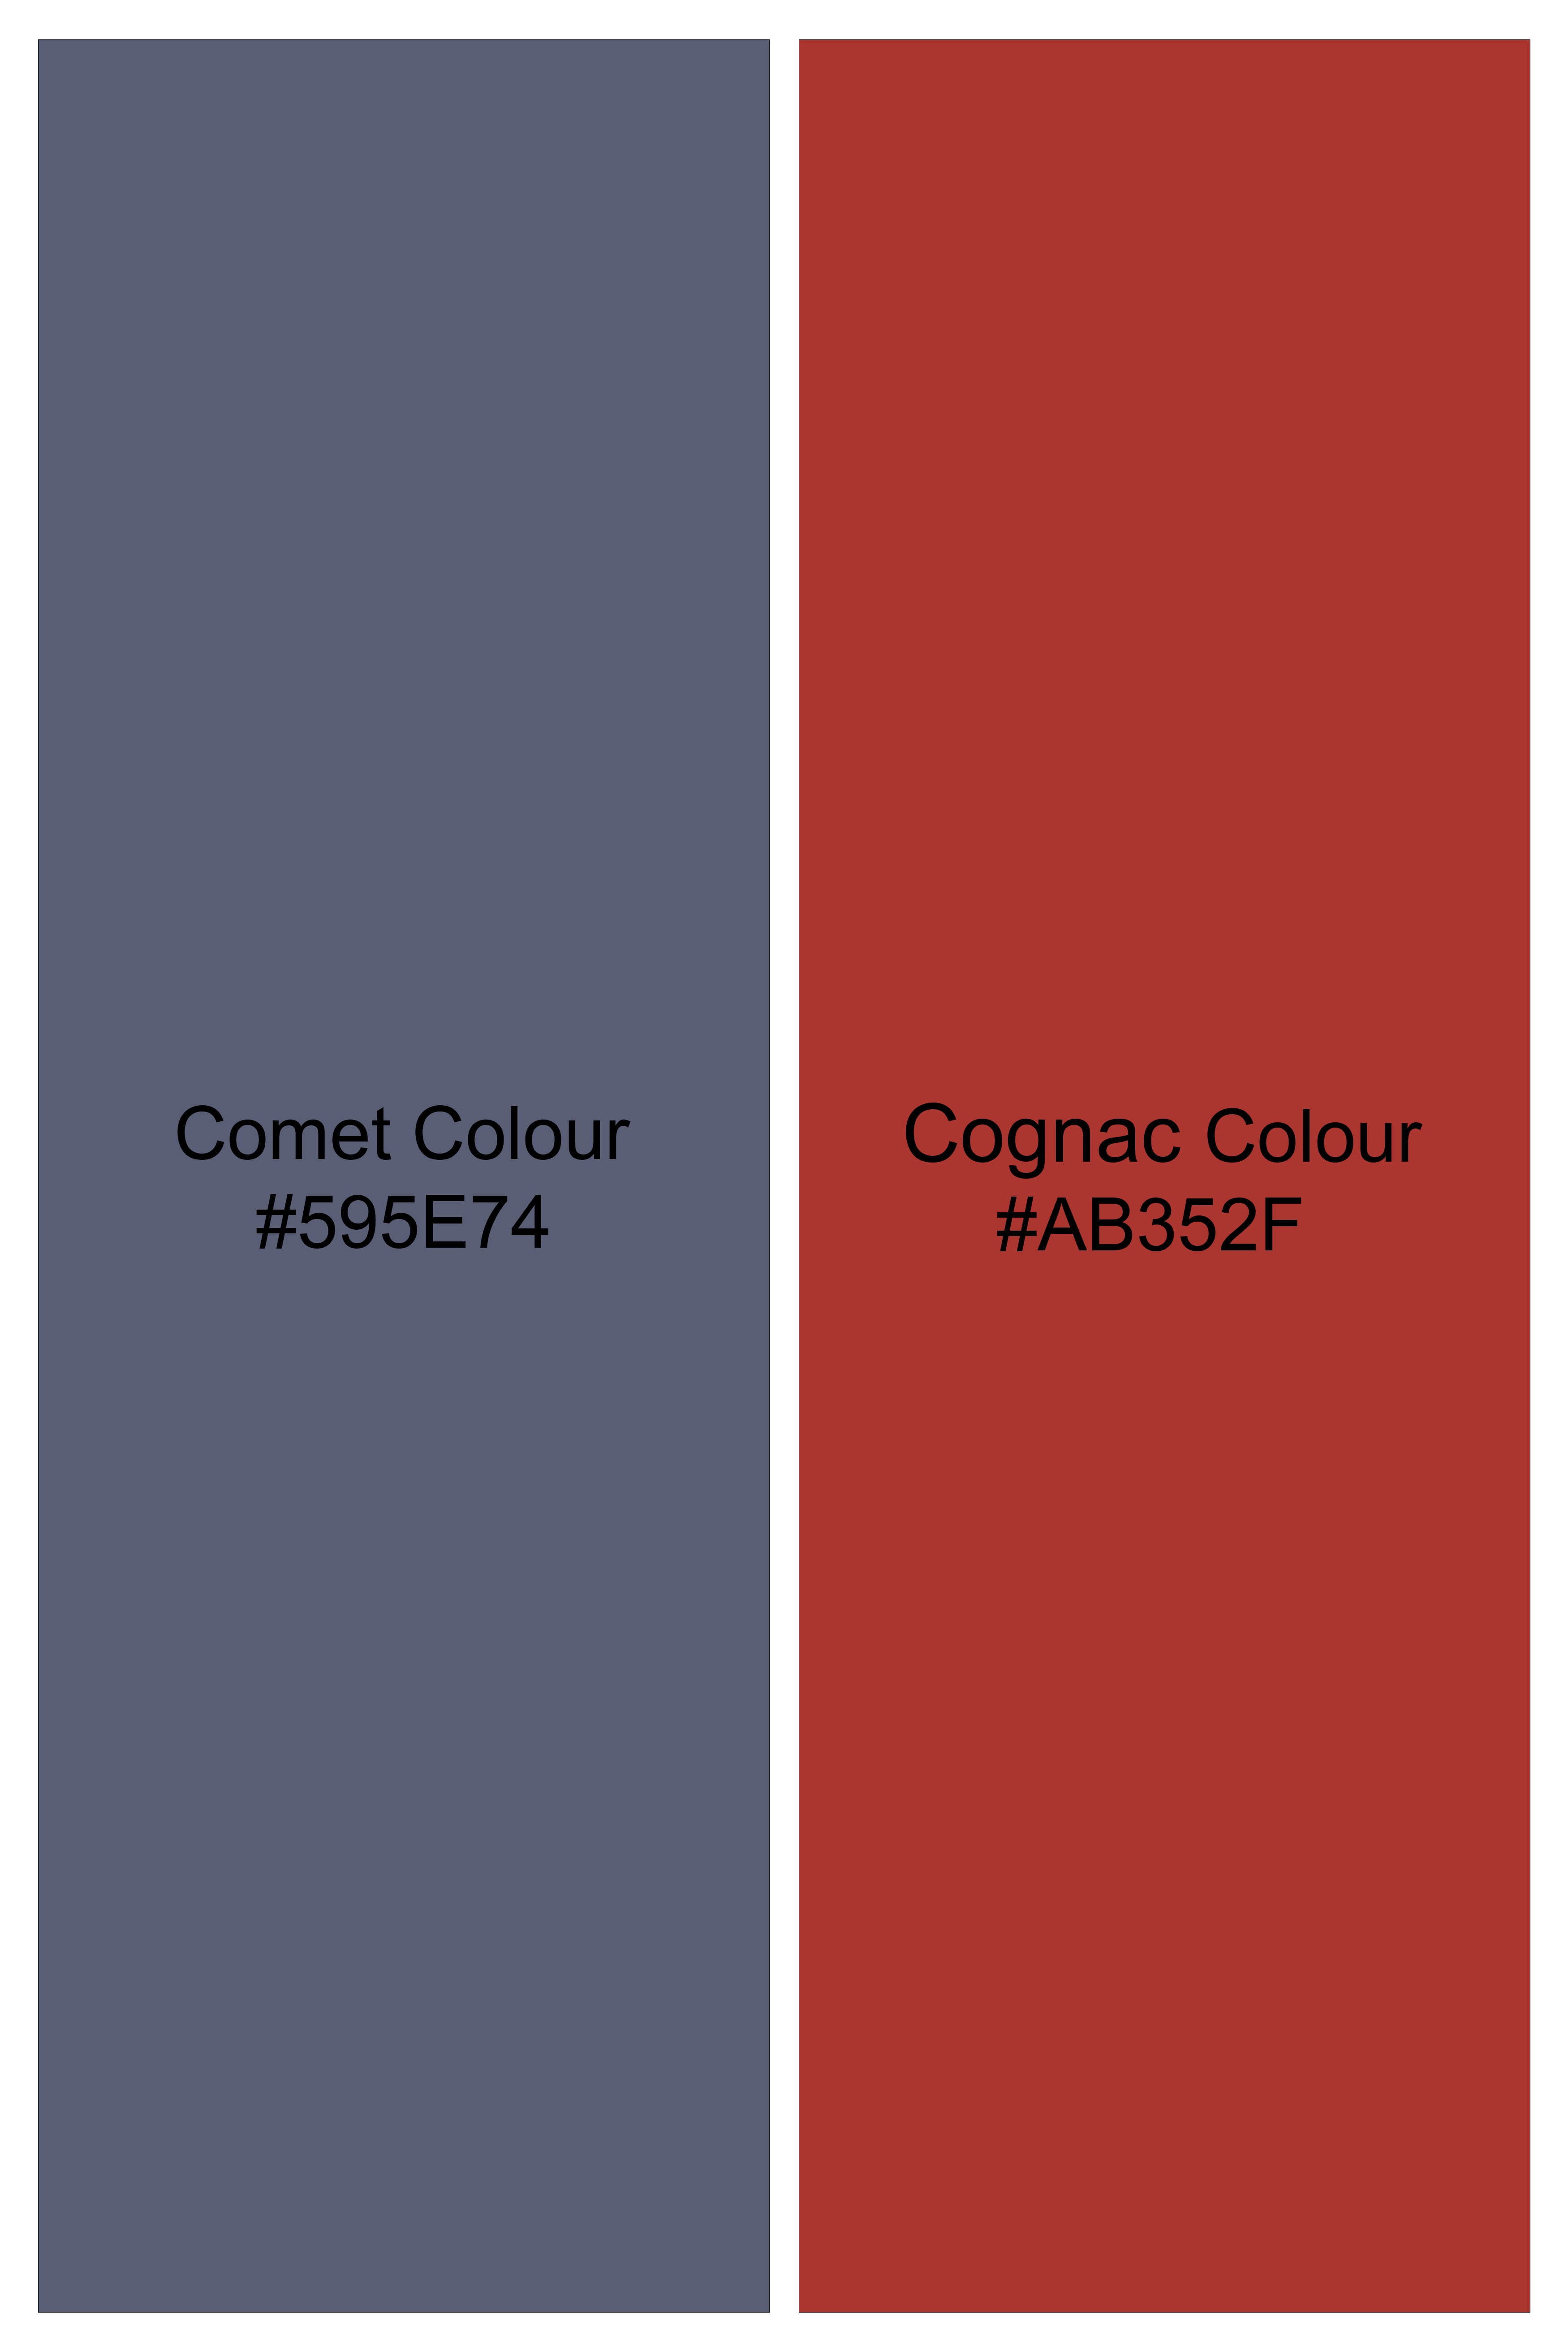 Comet Gray with Cognac Red Hand Painted Super Soft Premium Cotton Designer Kurta Shirt 6281-KS-ART-38, 6281-KS-ART-H-38, 6281-KS-ART-39, 6281-KS-ART-H-39, 6281-KS-ART-40, 6281-KS-ART-H-40, 6281-KS-ART-42, 6281-KS-ART-H-42, 6281-KS-ART-44, 6281-KS-ART-H-44, 6281-KS-ART-46, 6281-KS-ART-H-46, 6281-KS-ART-48, 6281-KS-ART-H-48, 6281-KS-ART-50, 6281-KS-ART-H-50, 6281-KS-ART-52, 6281-KS-ART-H-52